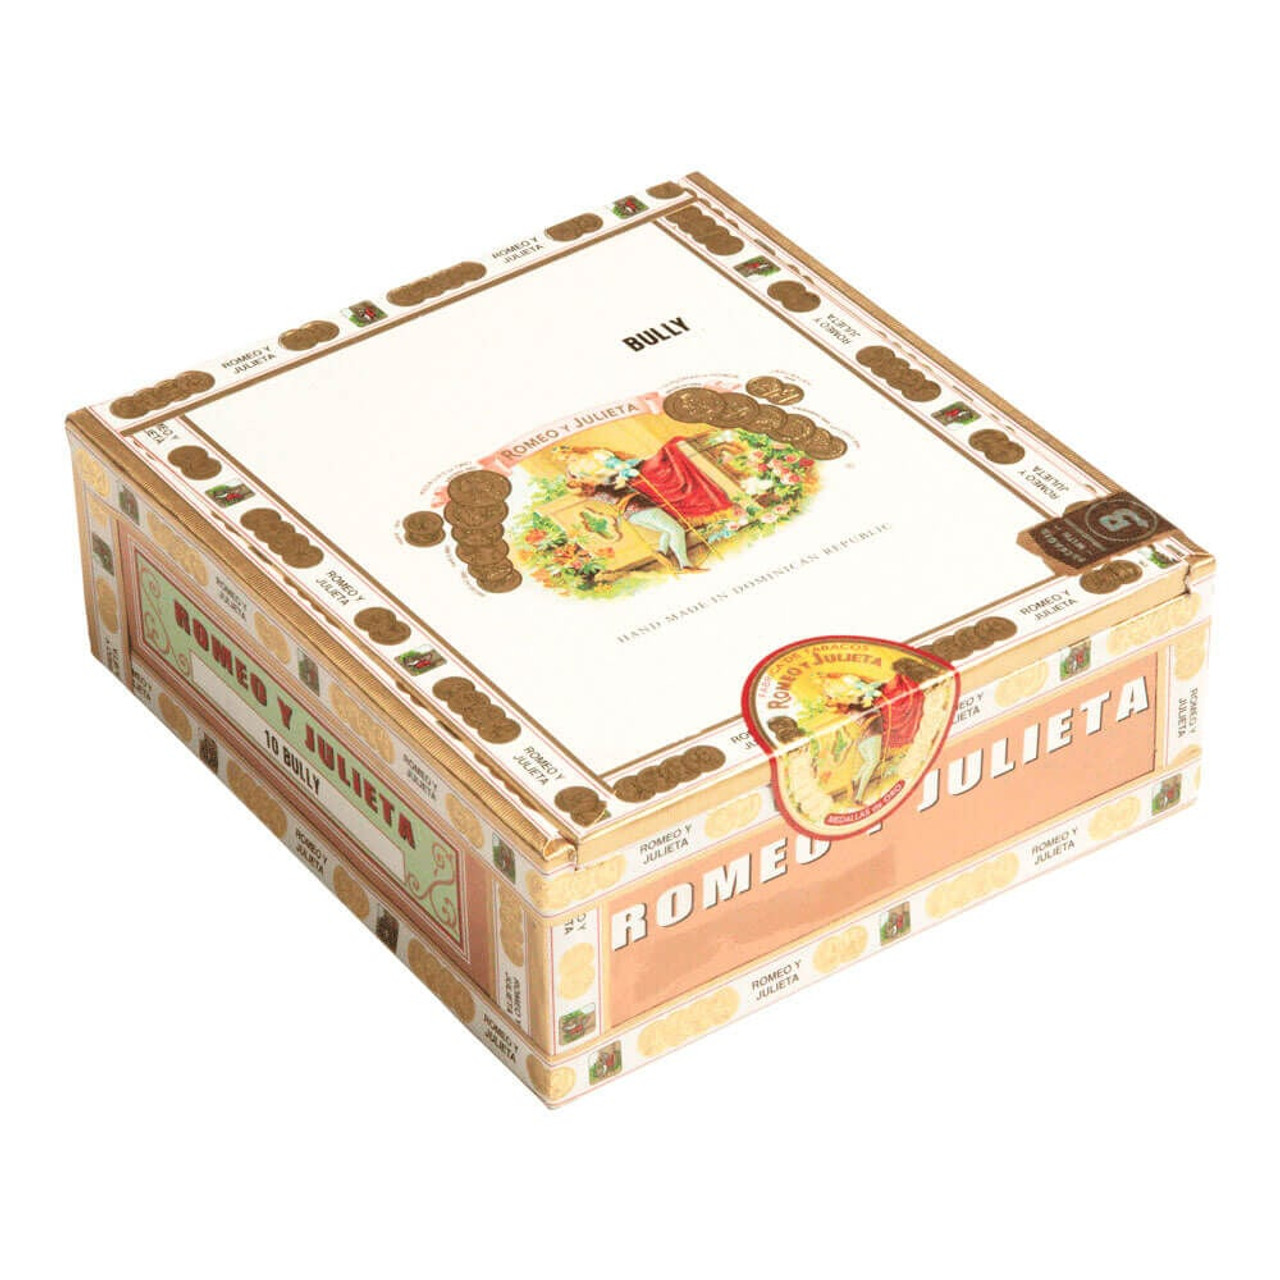 Romeo y Julieta 1875 Numero Dos Cigars - 6.12 x 52 (Box of 10 Aluminum Tubes) *Box